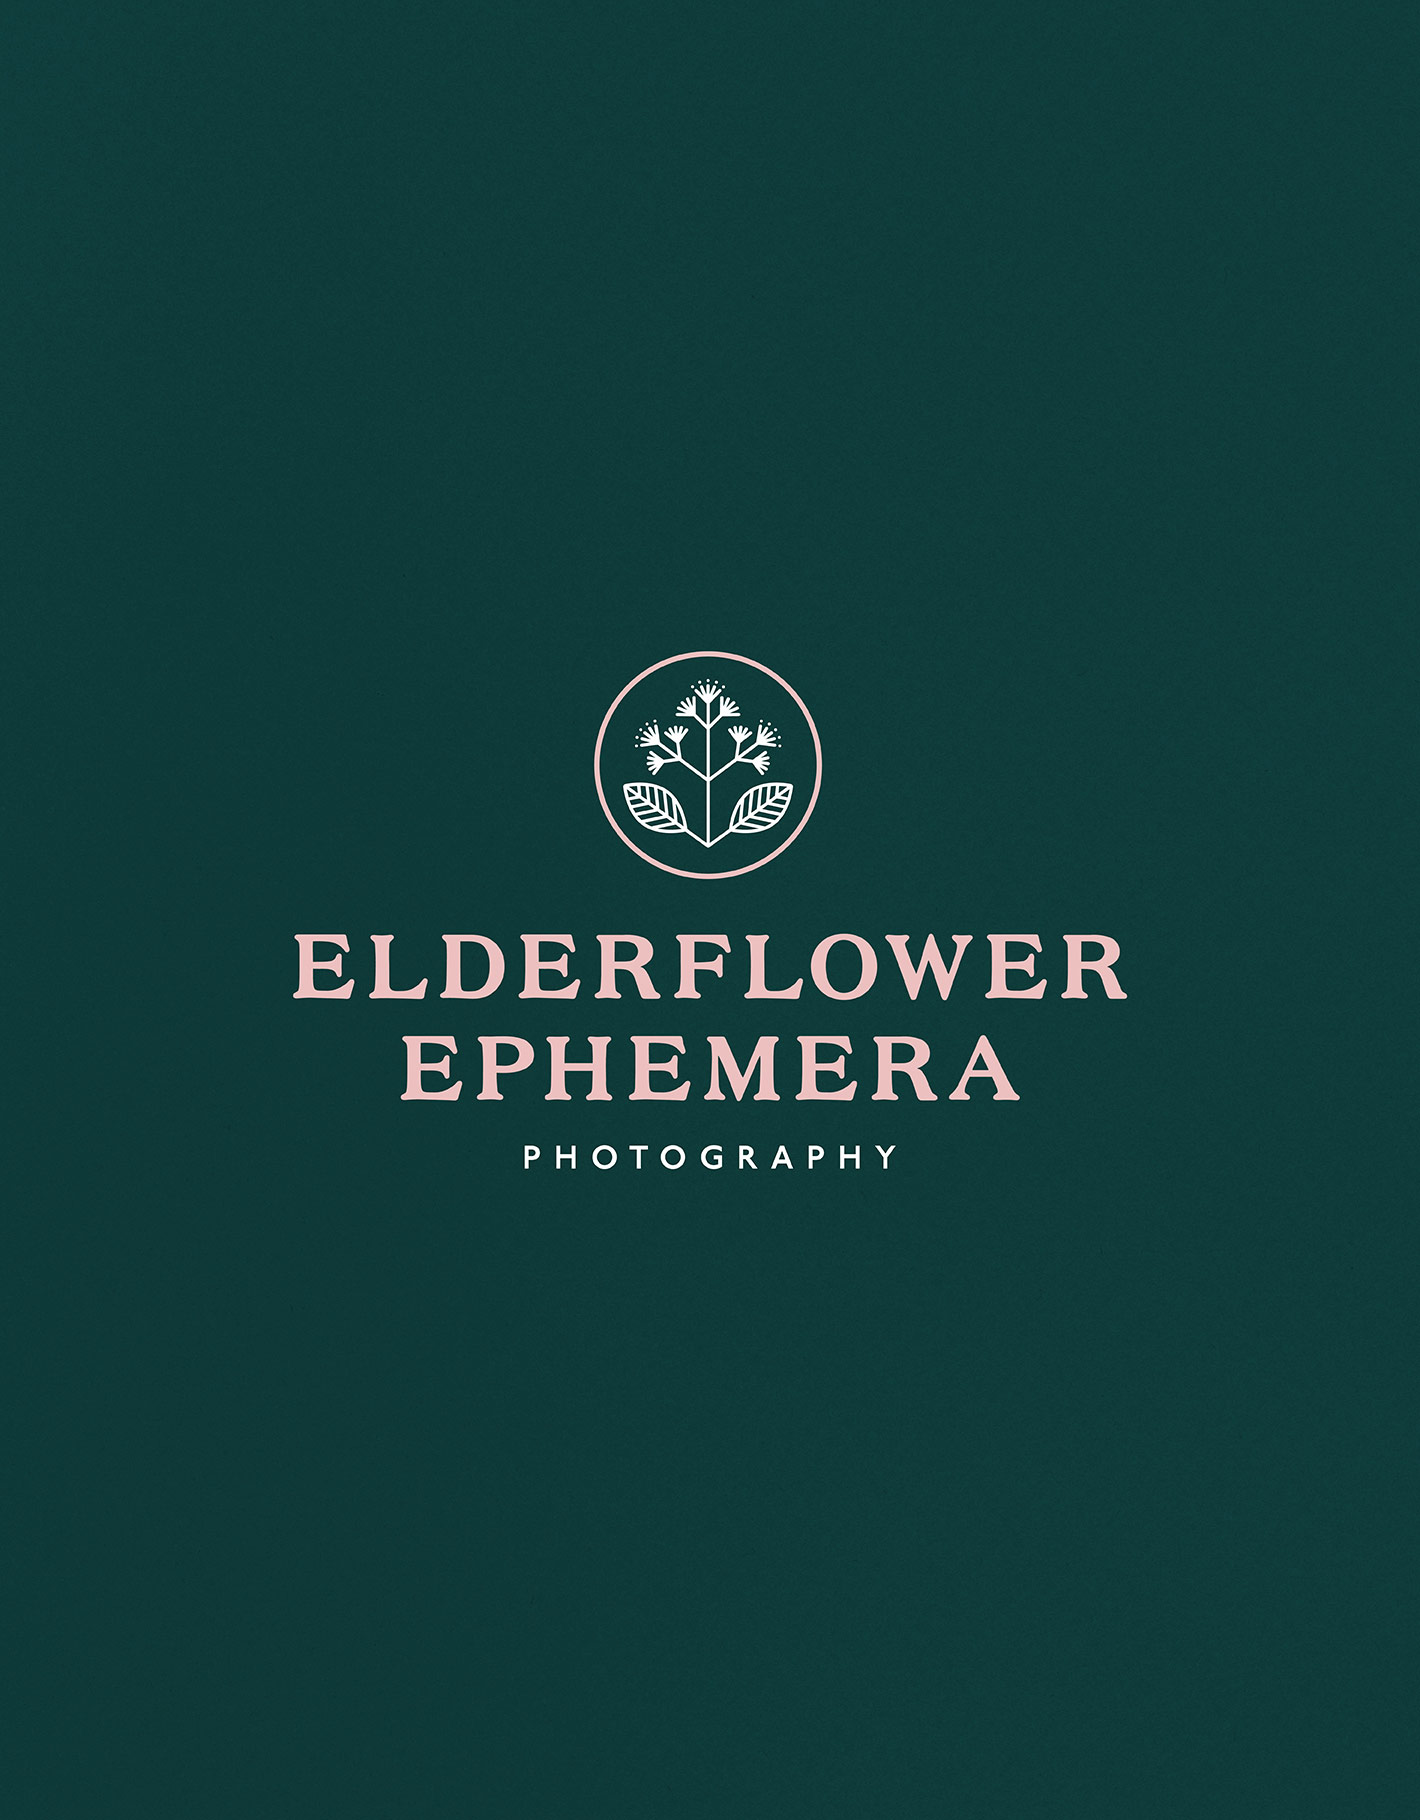 Floral icon and serif logotype for elderflower ephemera